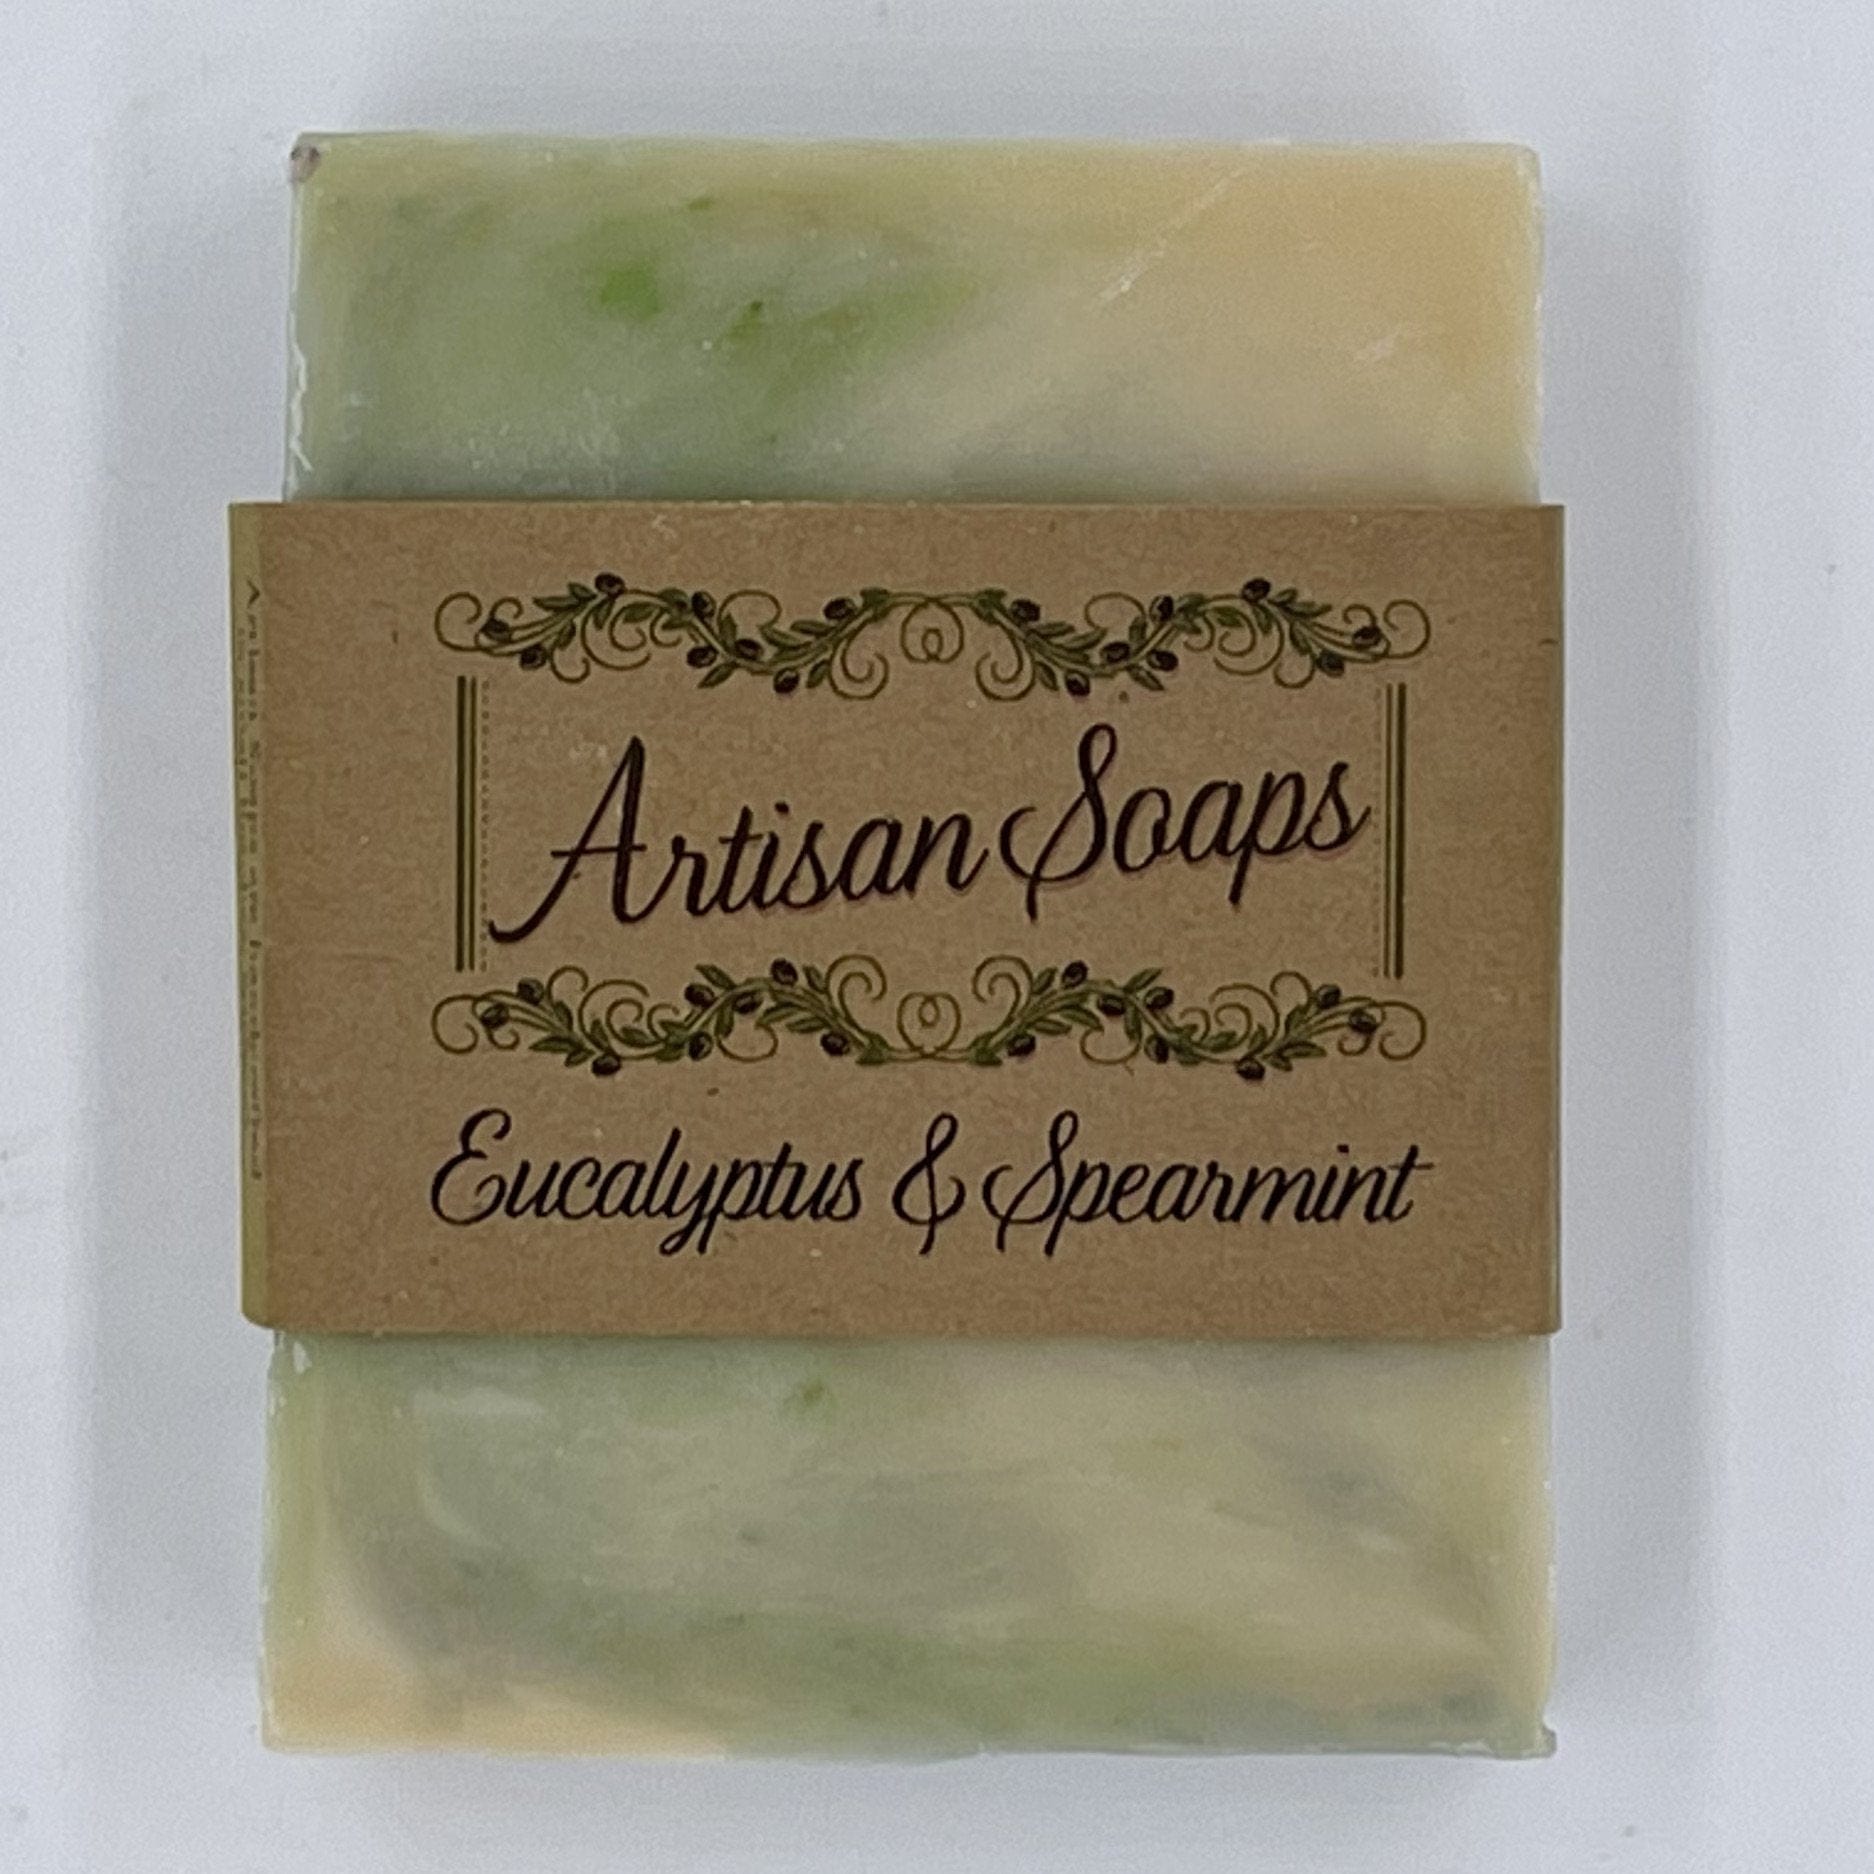 Eucalyptus and Spearmint Soap Bar - Artisan Soaps